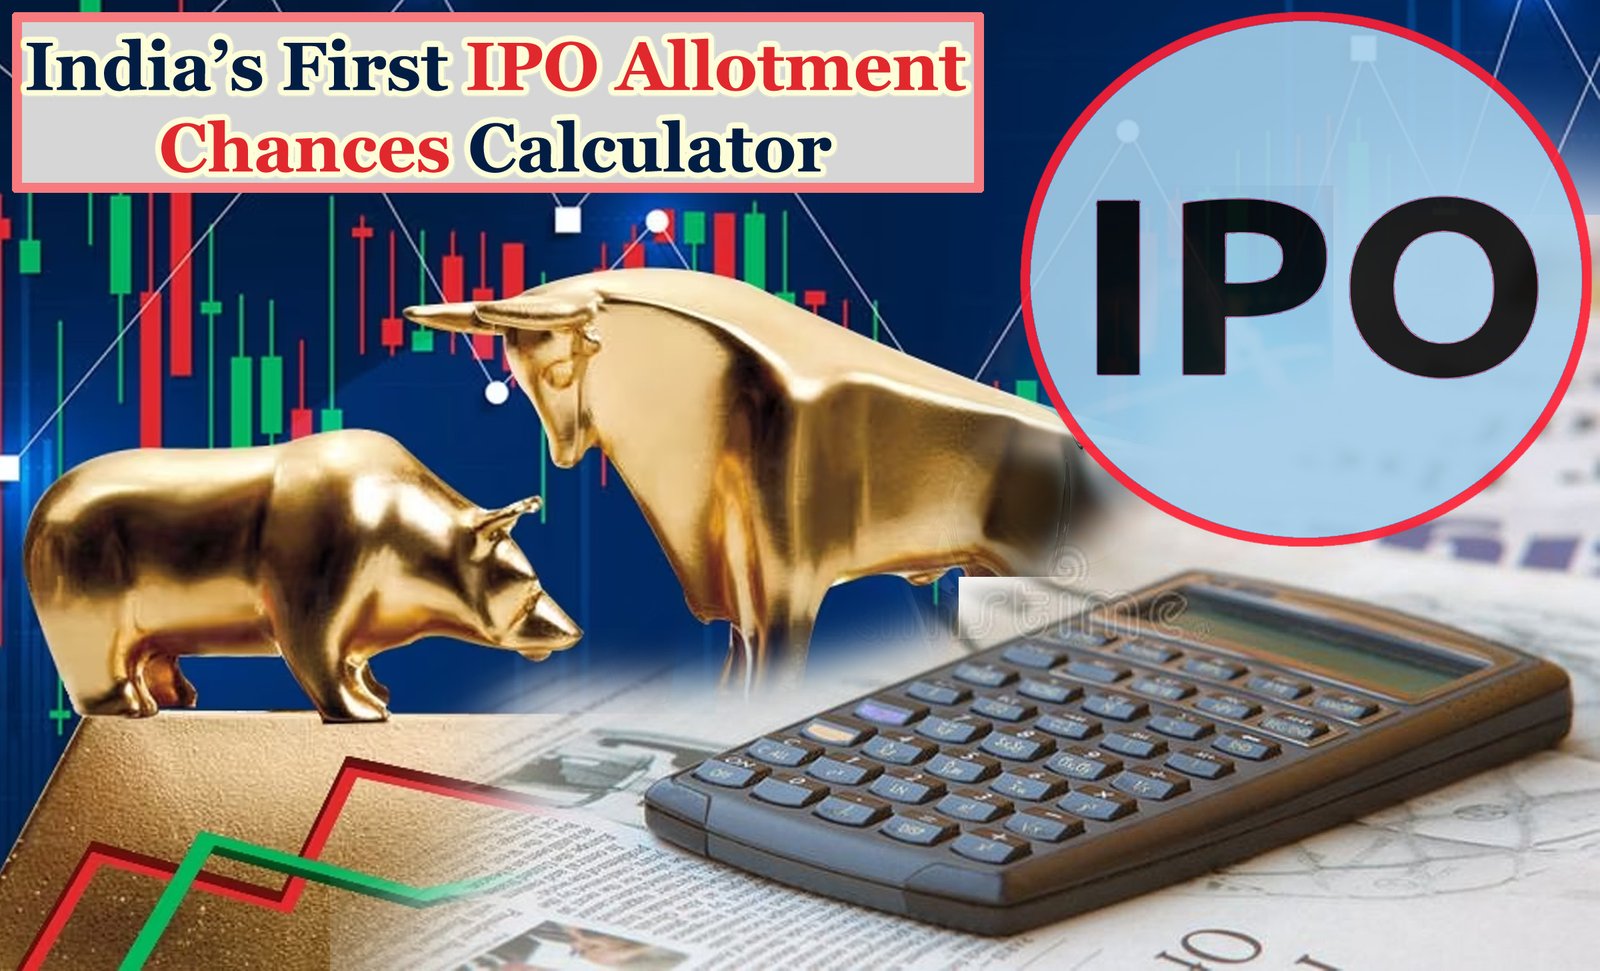 IPO Allotment Chances Calculator